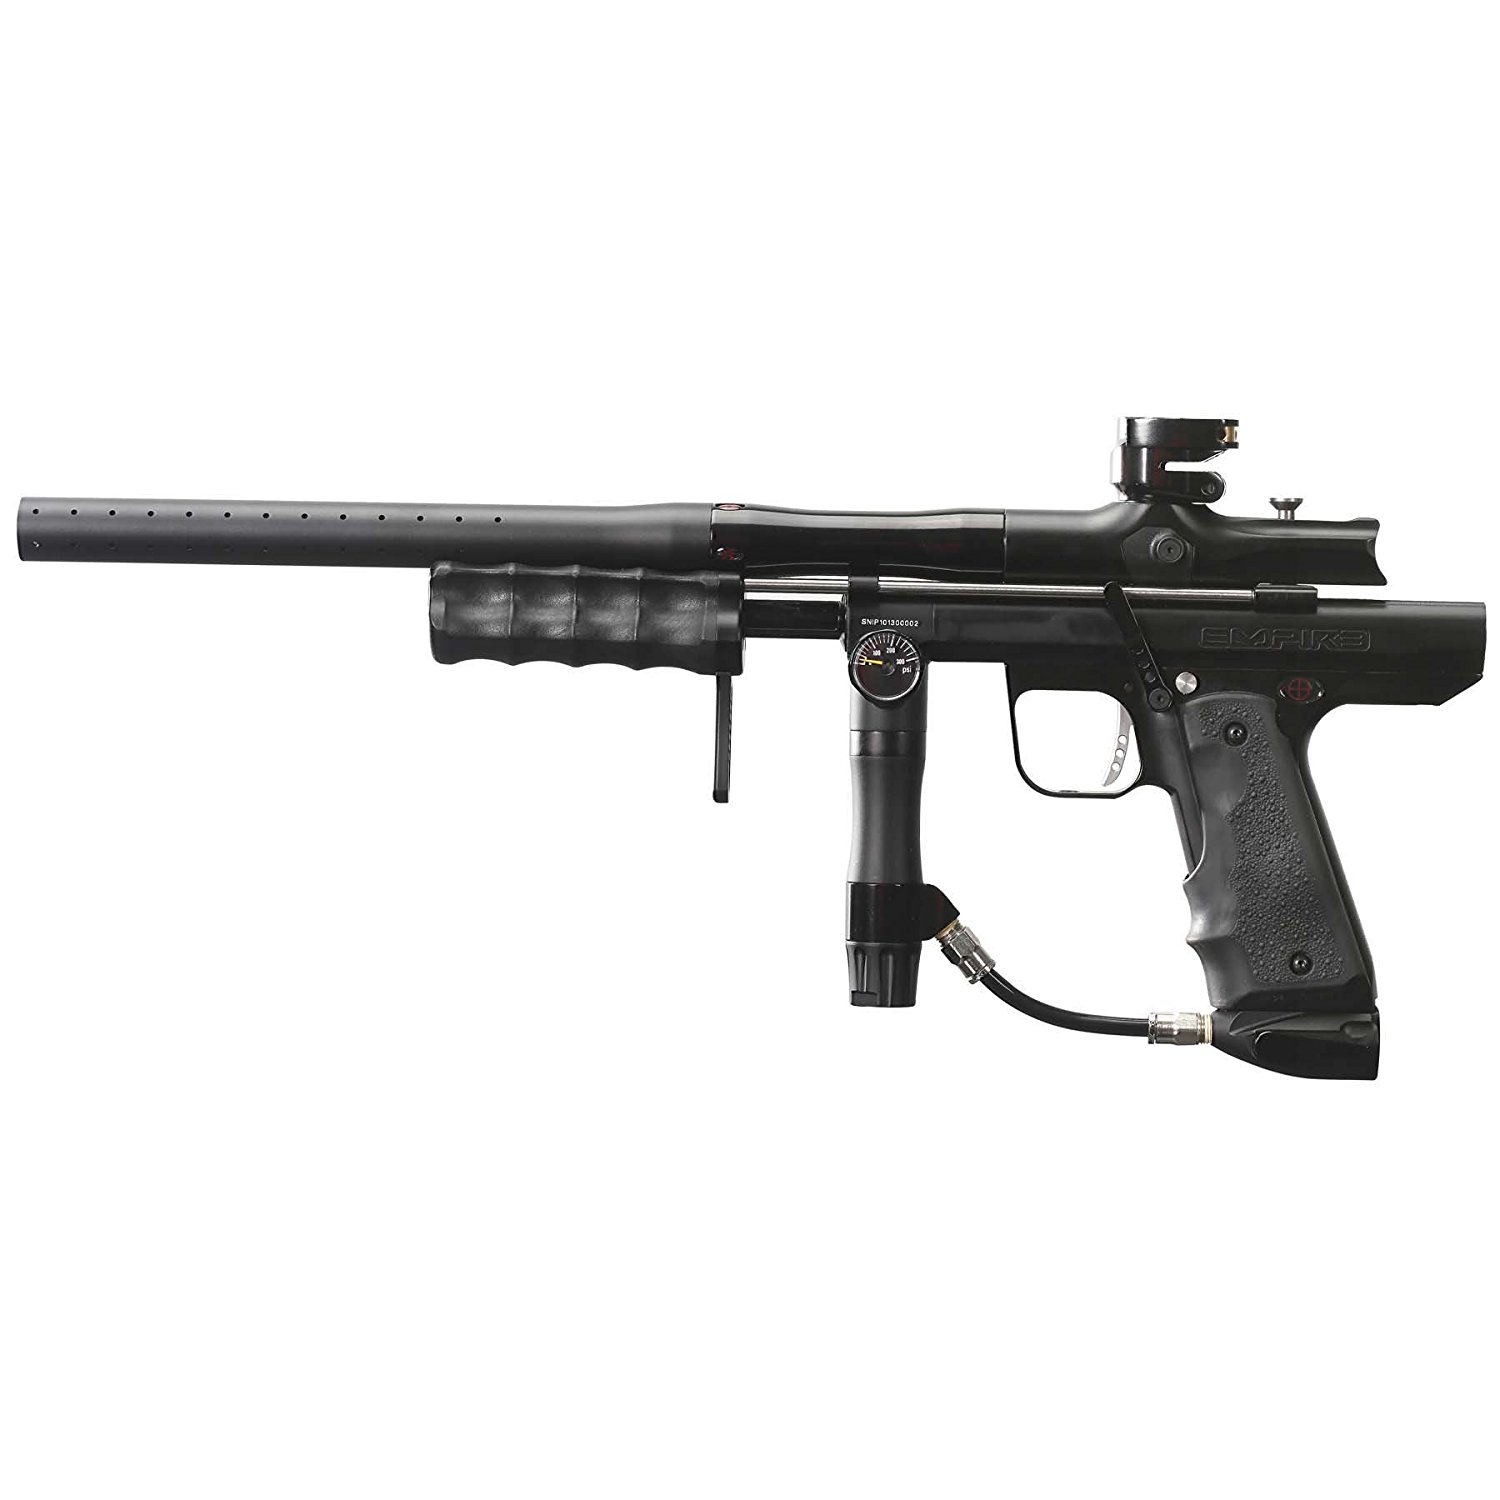 Empire Paintball Sniper Pump Marker with Barrel Kit, Dust Black Polished Black